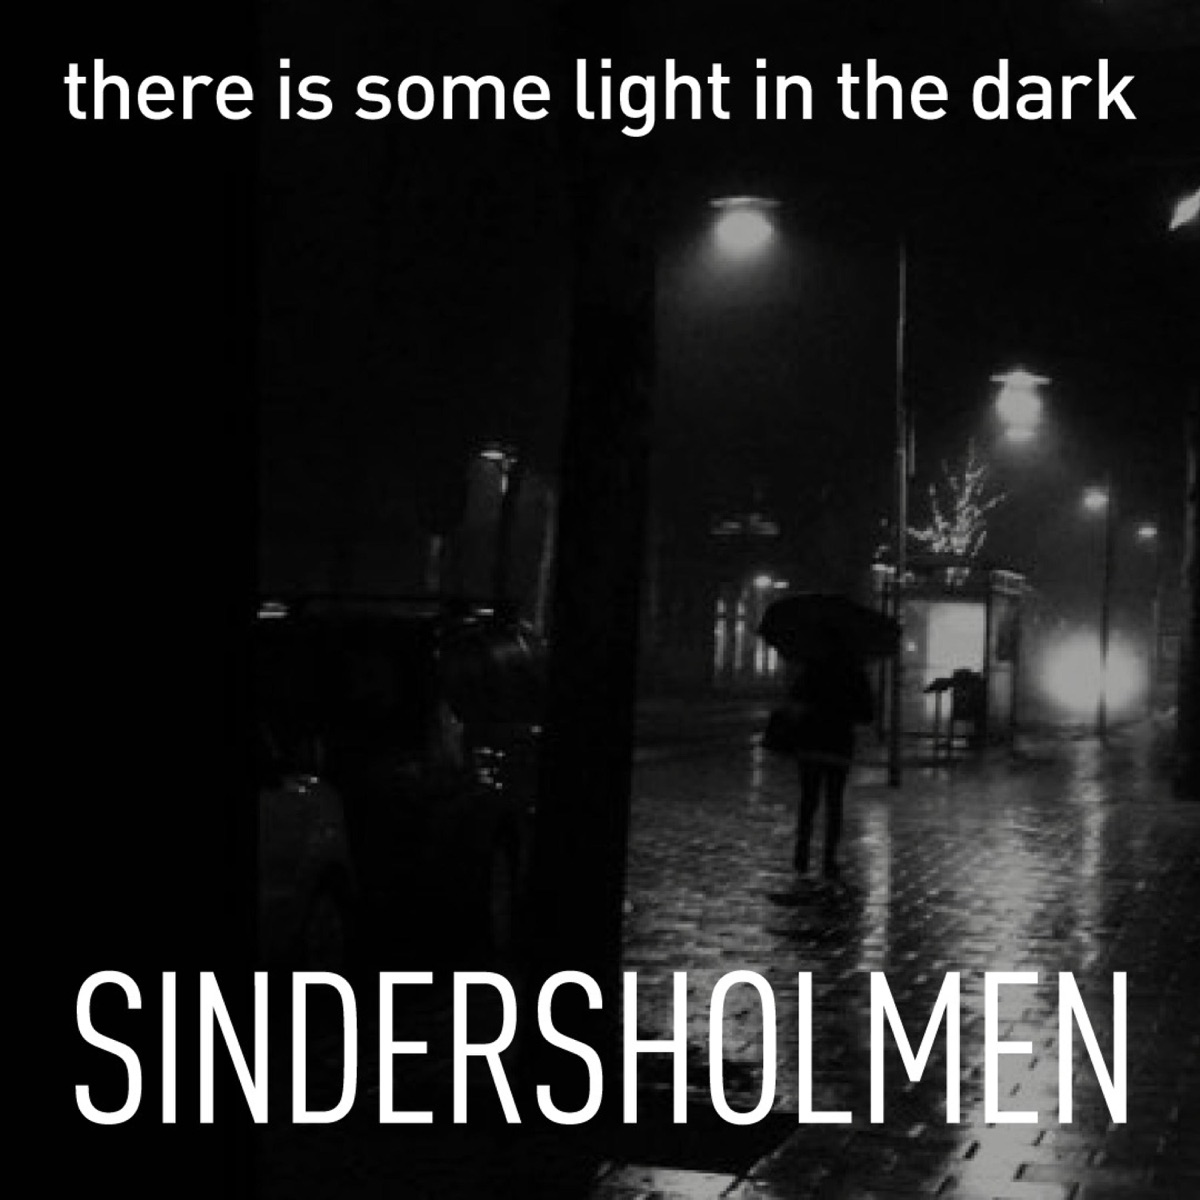 Anhedonia - EP by Sindersholmen on Apple Music